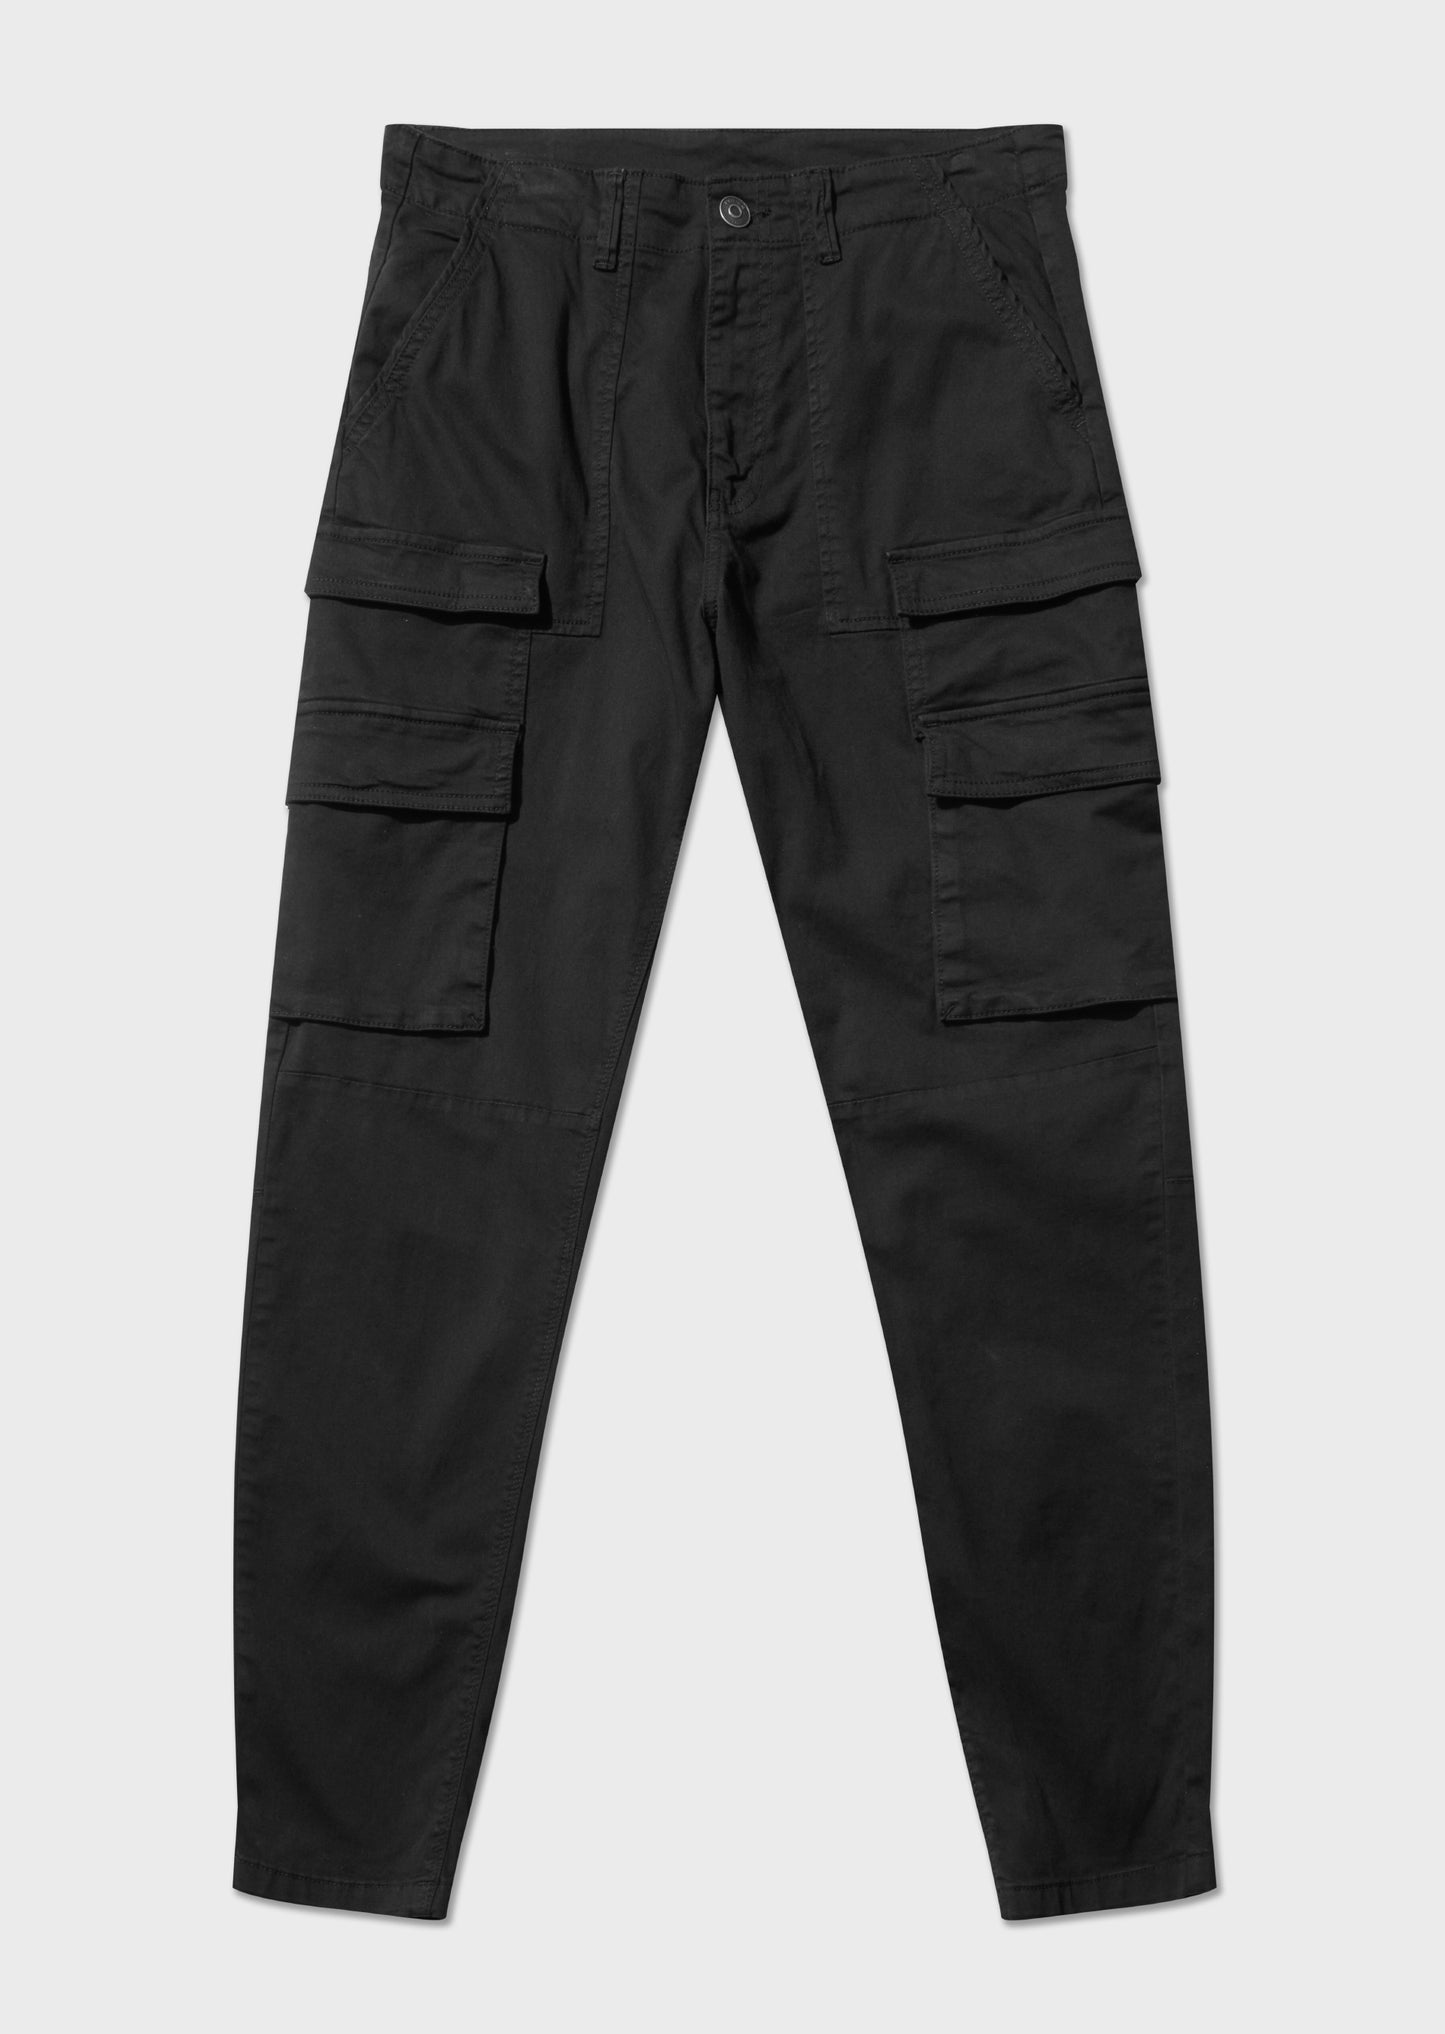 Concor Black Cargo Pants